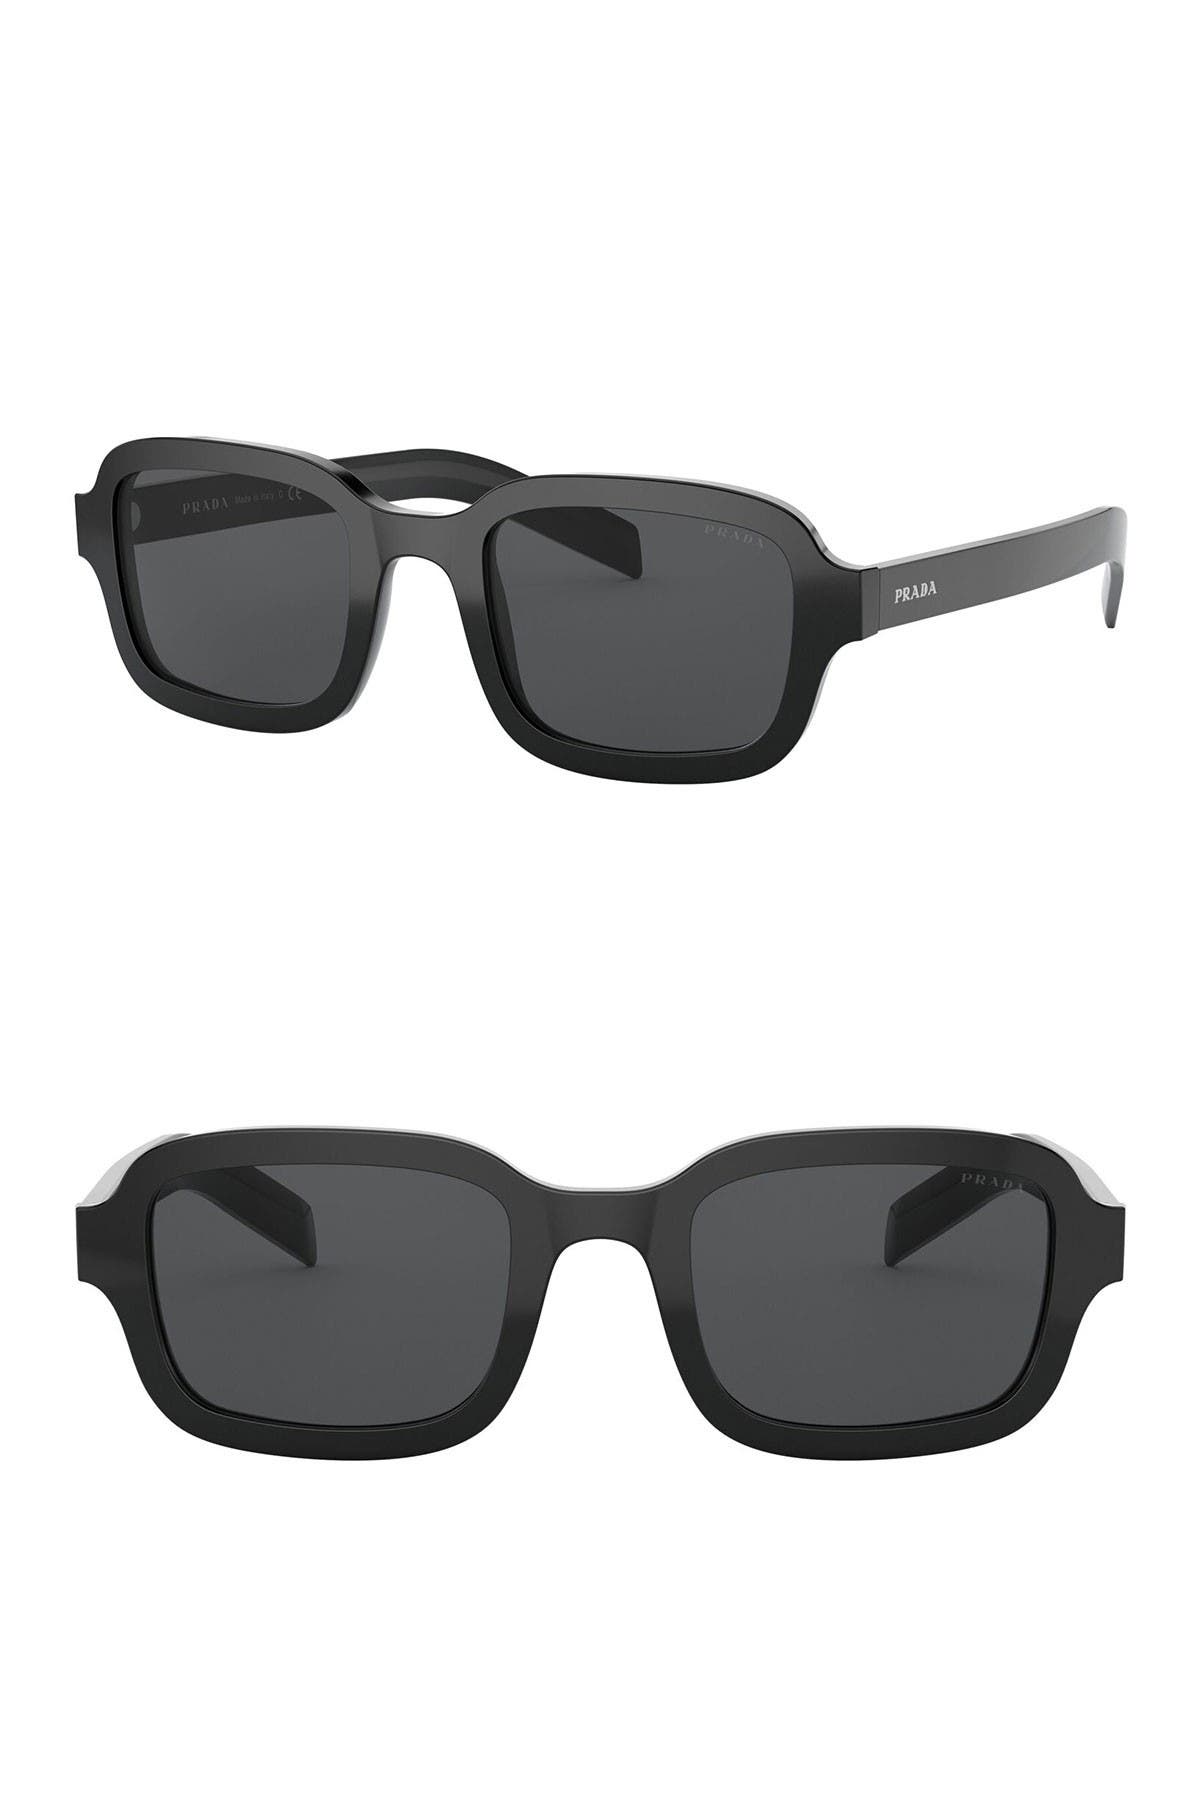 prada rectangle sunglasses